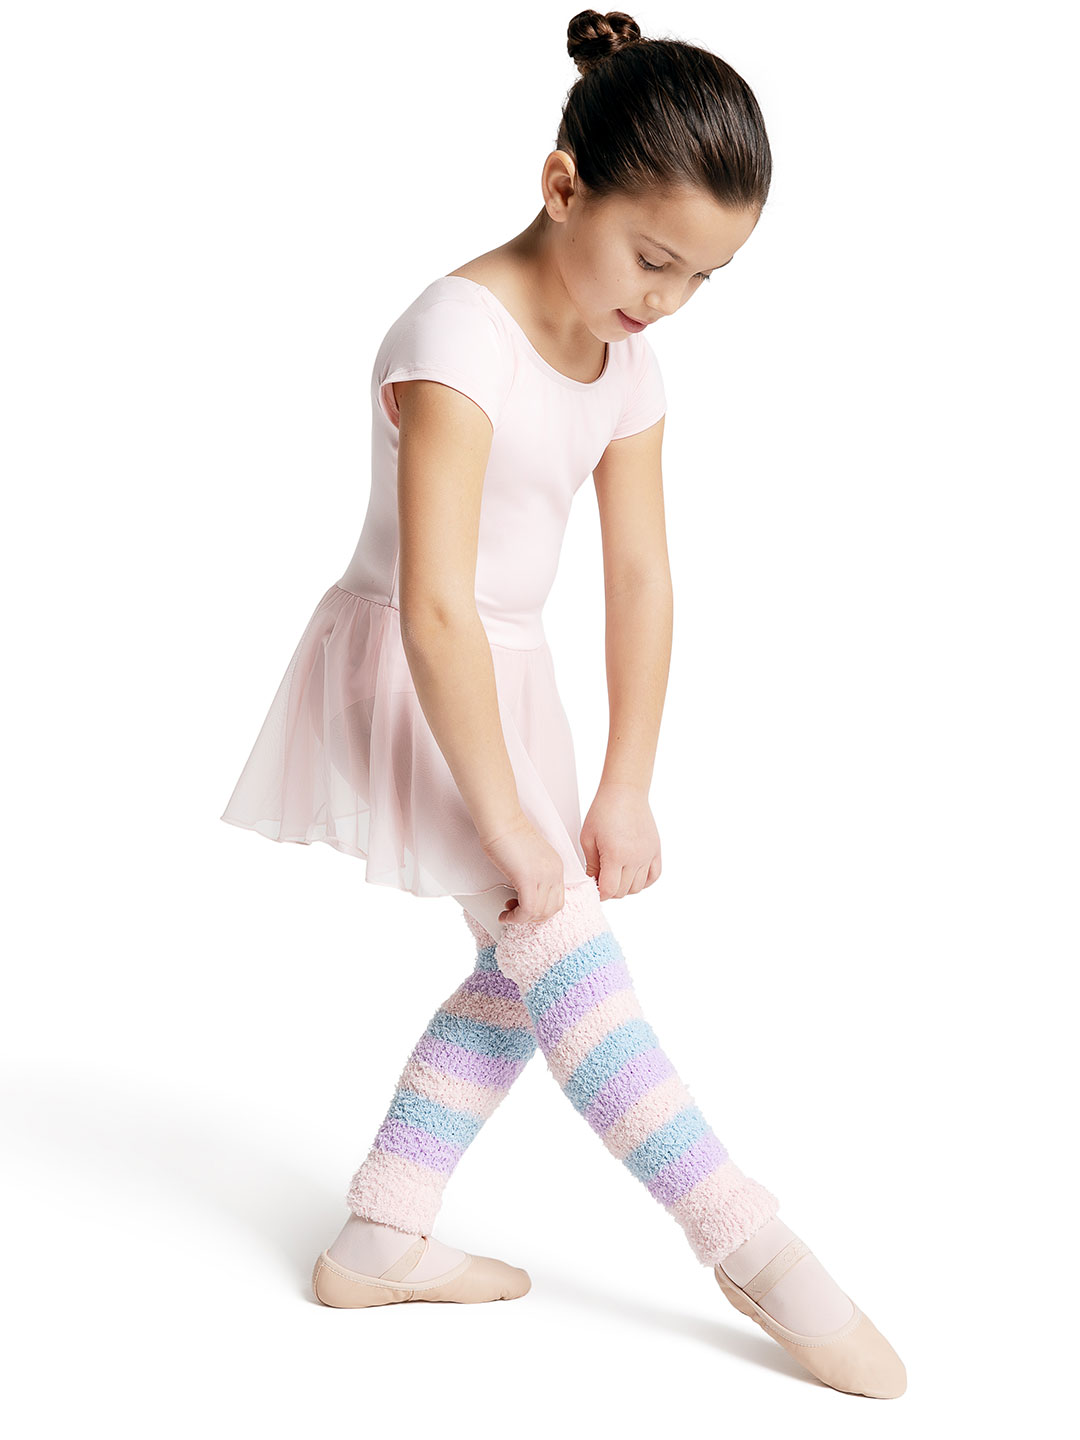  Huggalugs Girls Sherbet Stripe Legruffle Leg Warmers, Multi,  Regular (fits to 8 years): Infant And Toddler Leg Warmers: Clothing, Shoes  & Jewelry